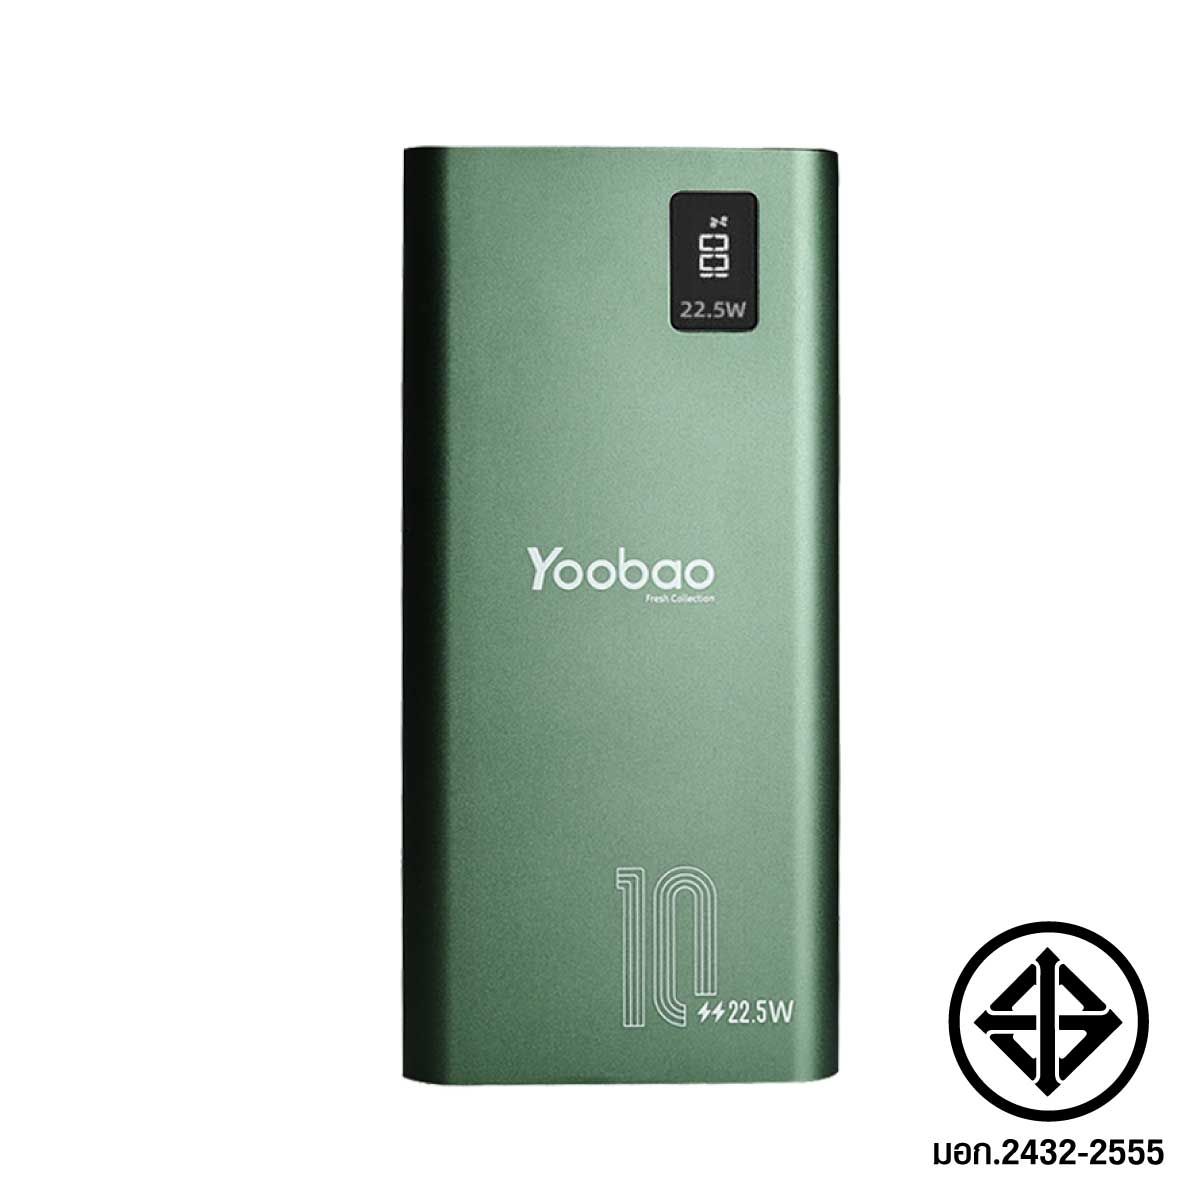 YOOBAO Powerbank 10000mAh รุ่นPD18-V2/Green Fast Charge/QC/PD20W รองรับการชาร์จเร็ว LCD Display Aluminum+ABS